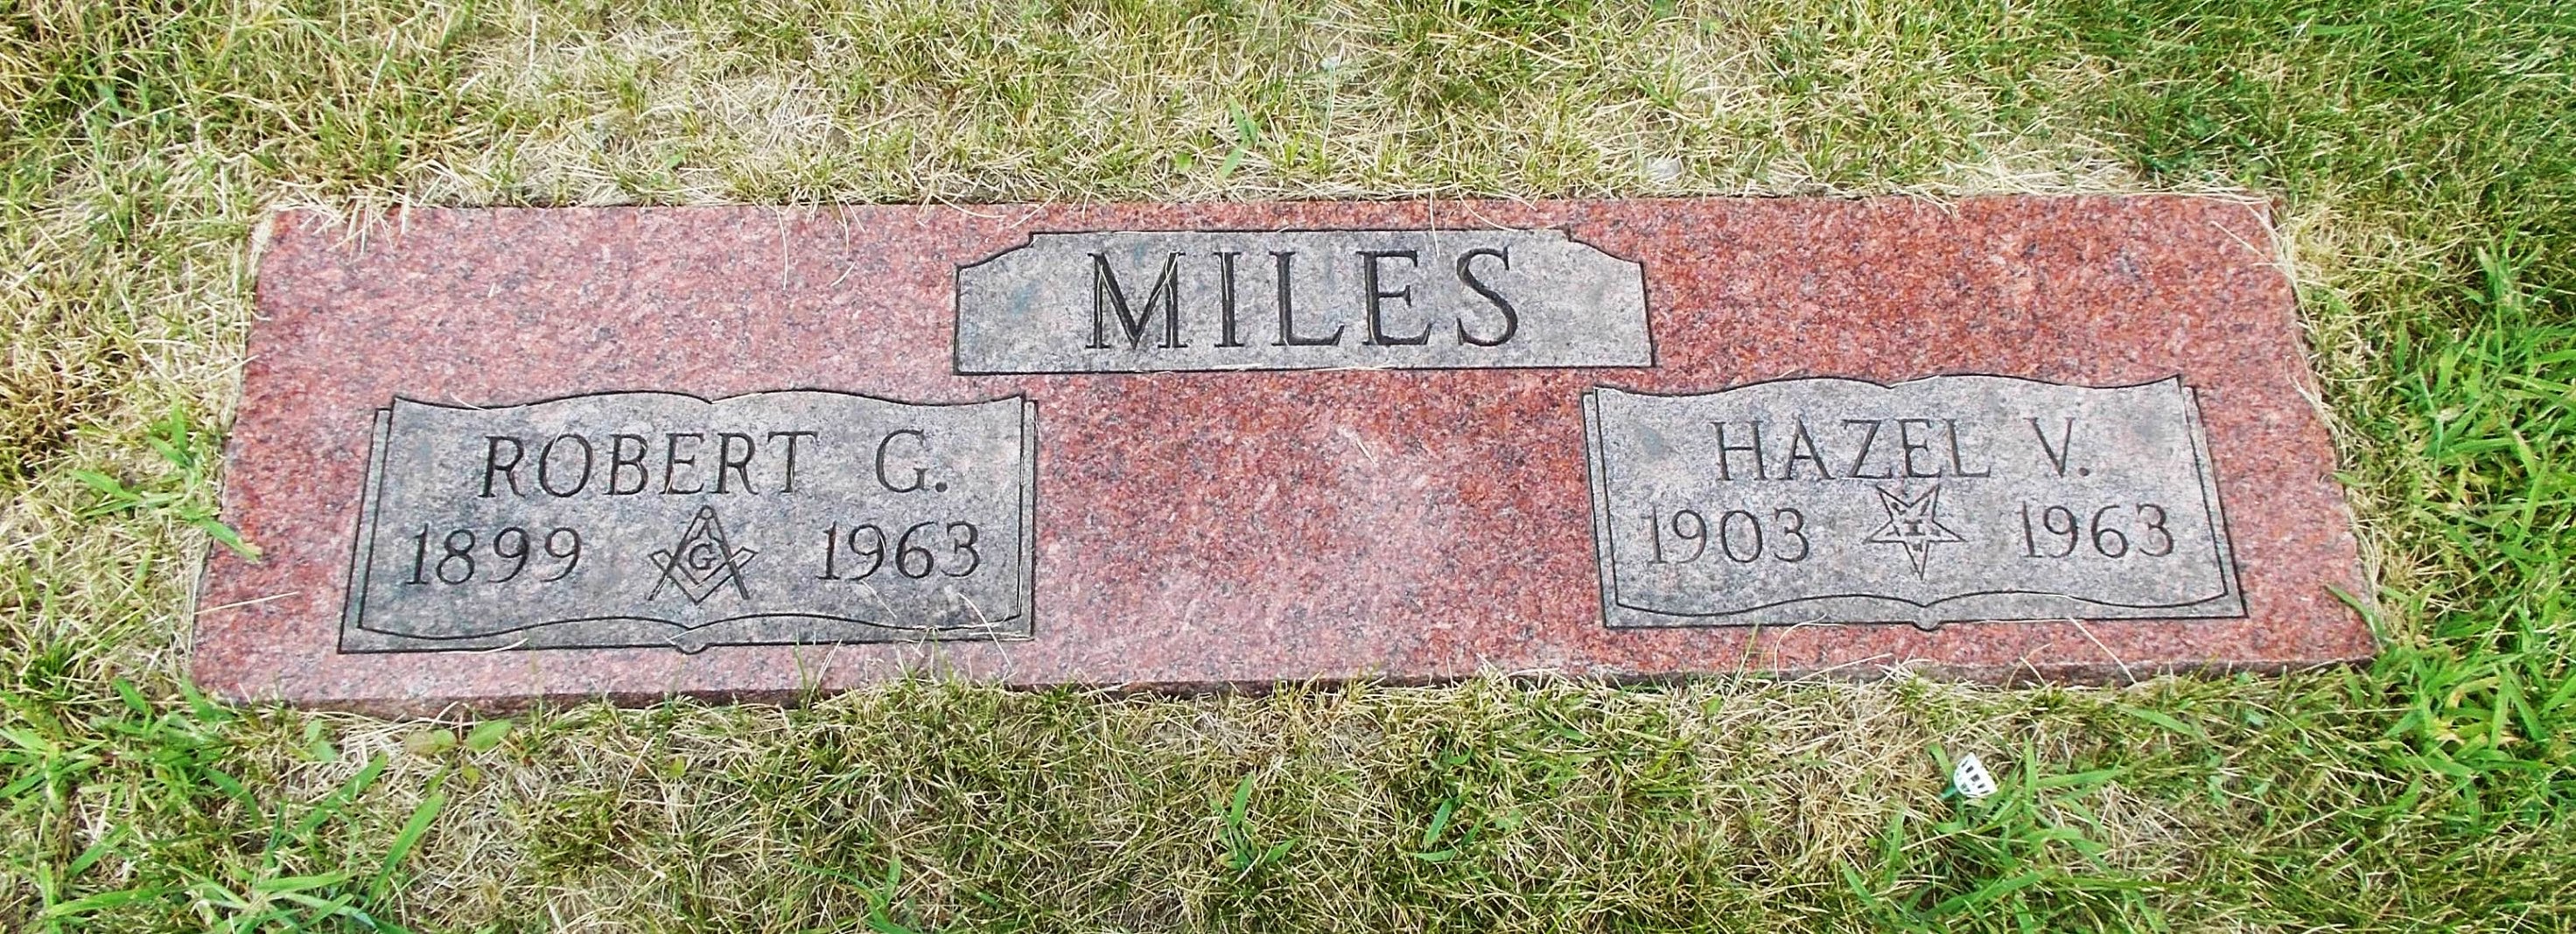 Robert G Miles